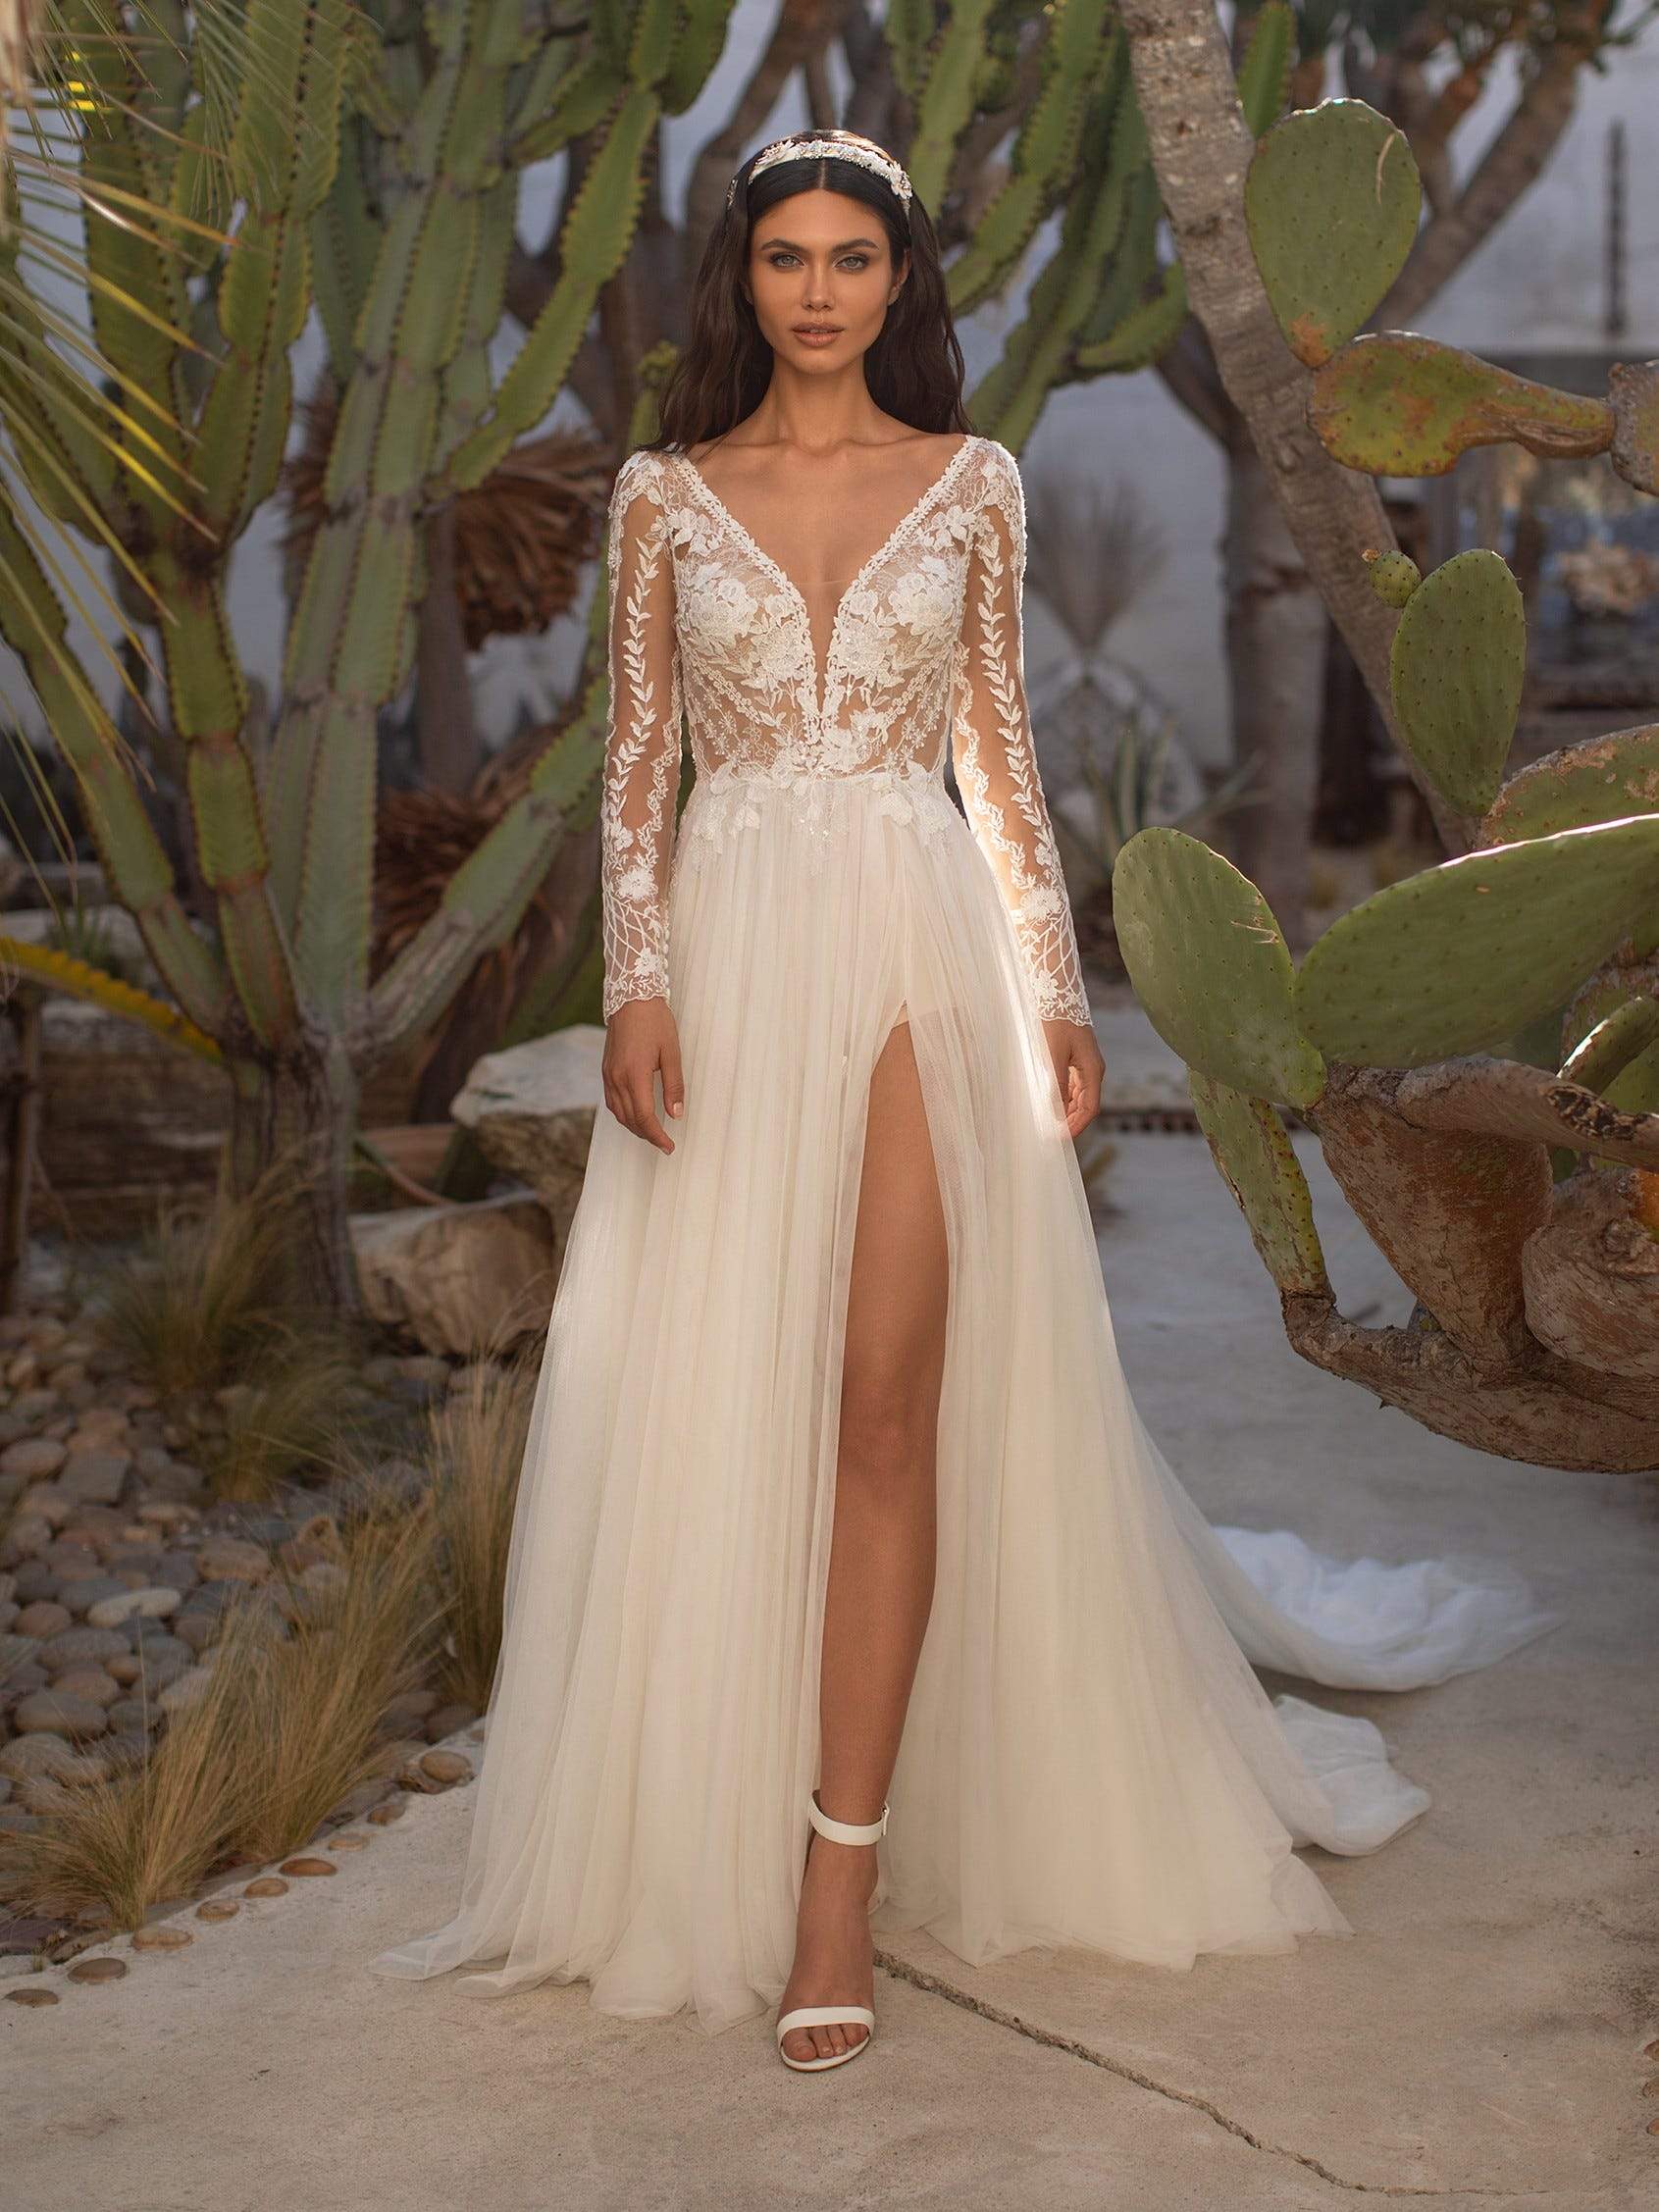 Gorgeous Bridal Wedding Accessories Dress Sparkling Silver Crystal Sash  Belt | eBay